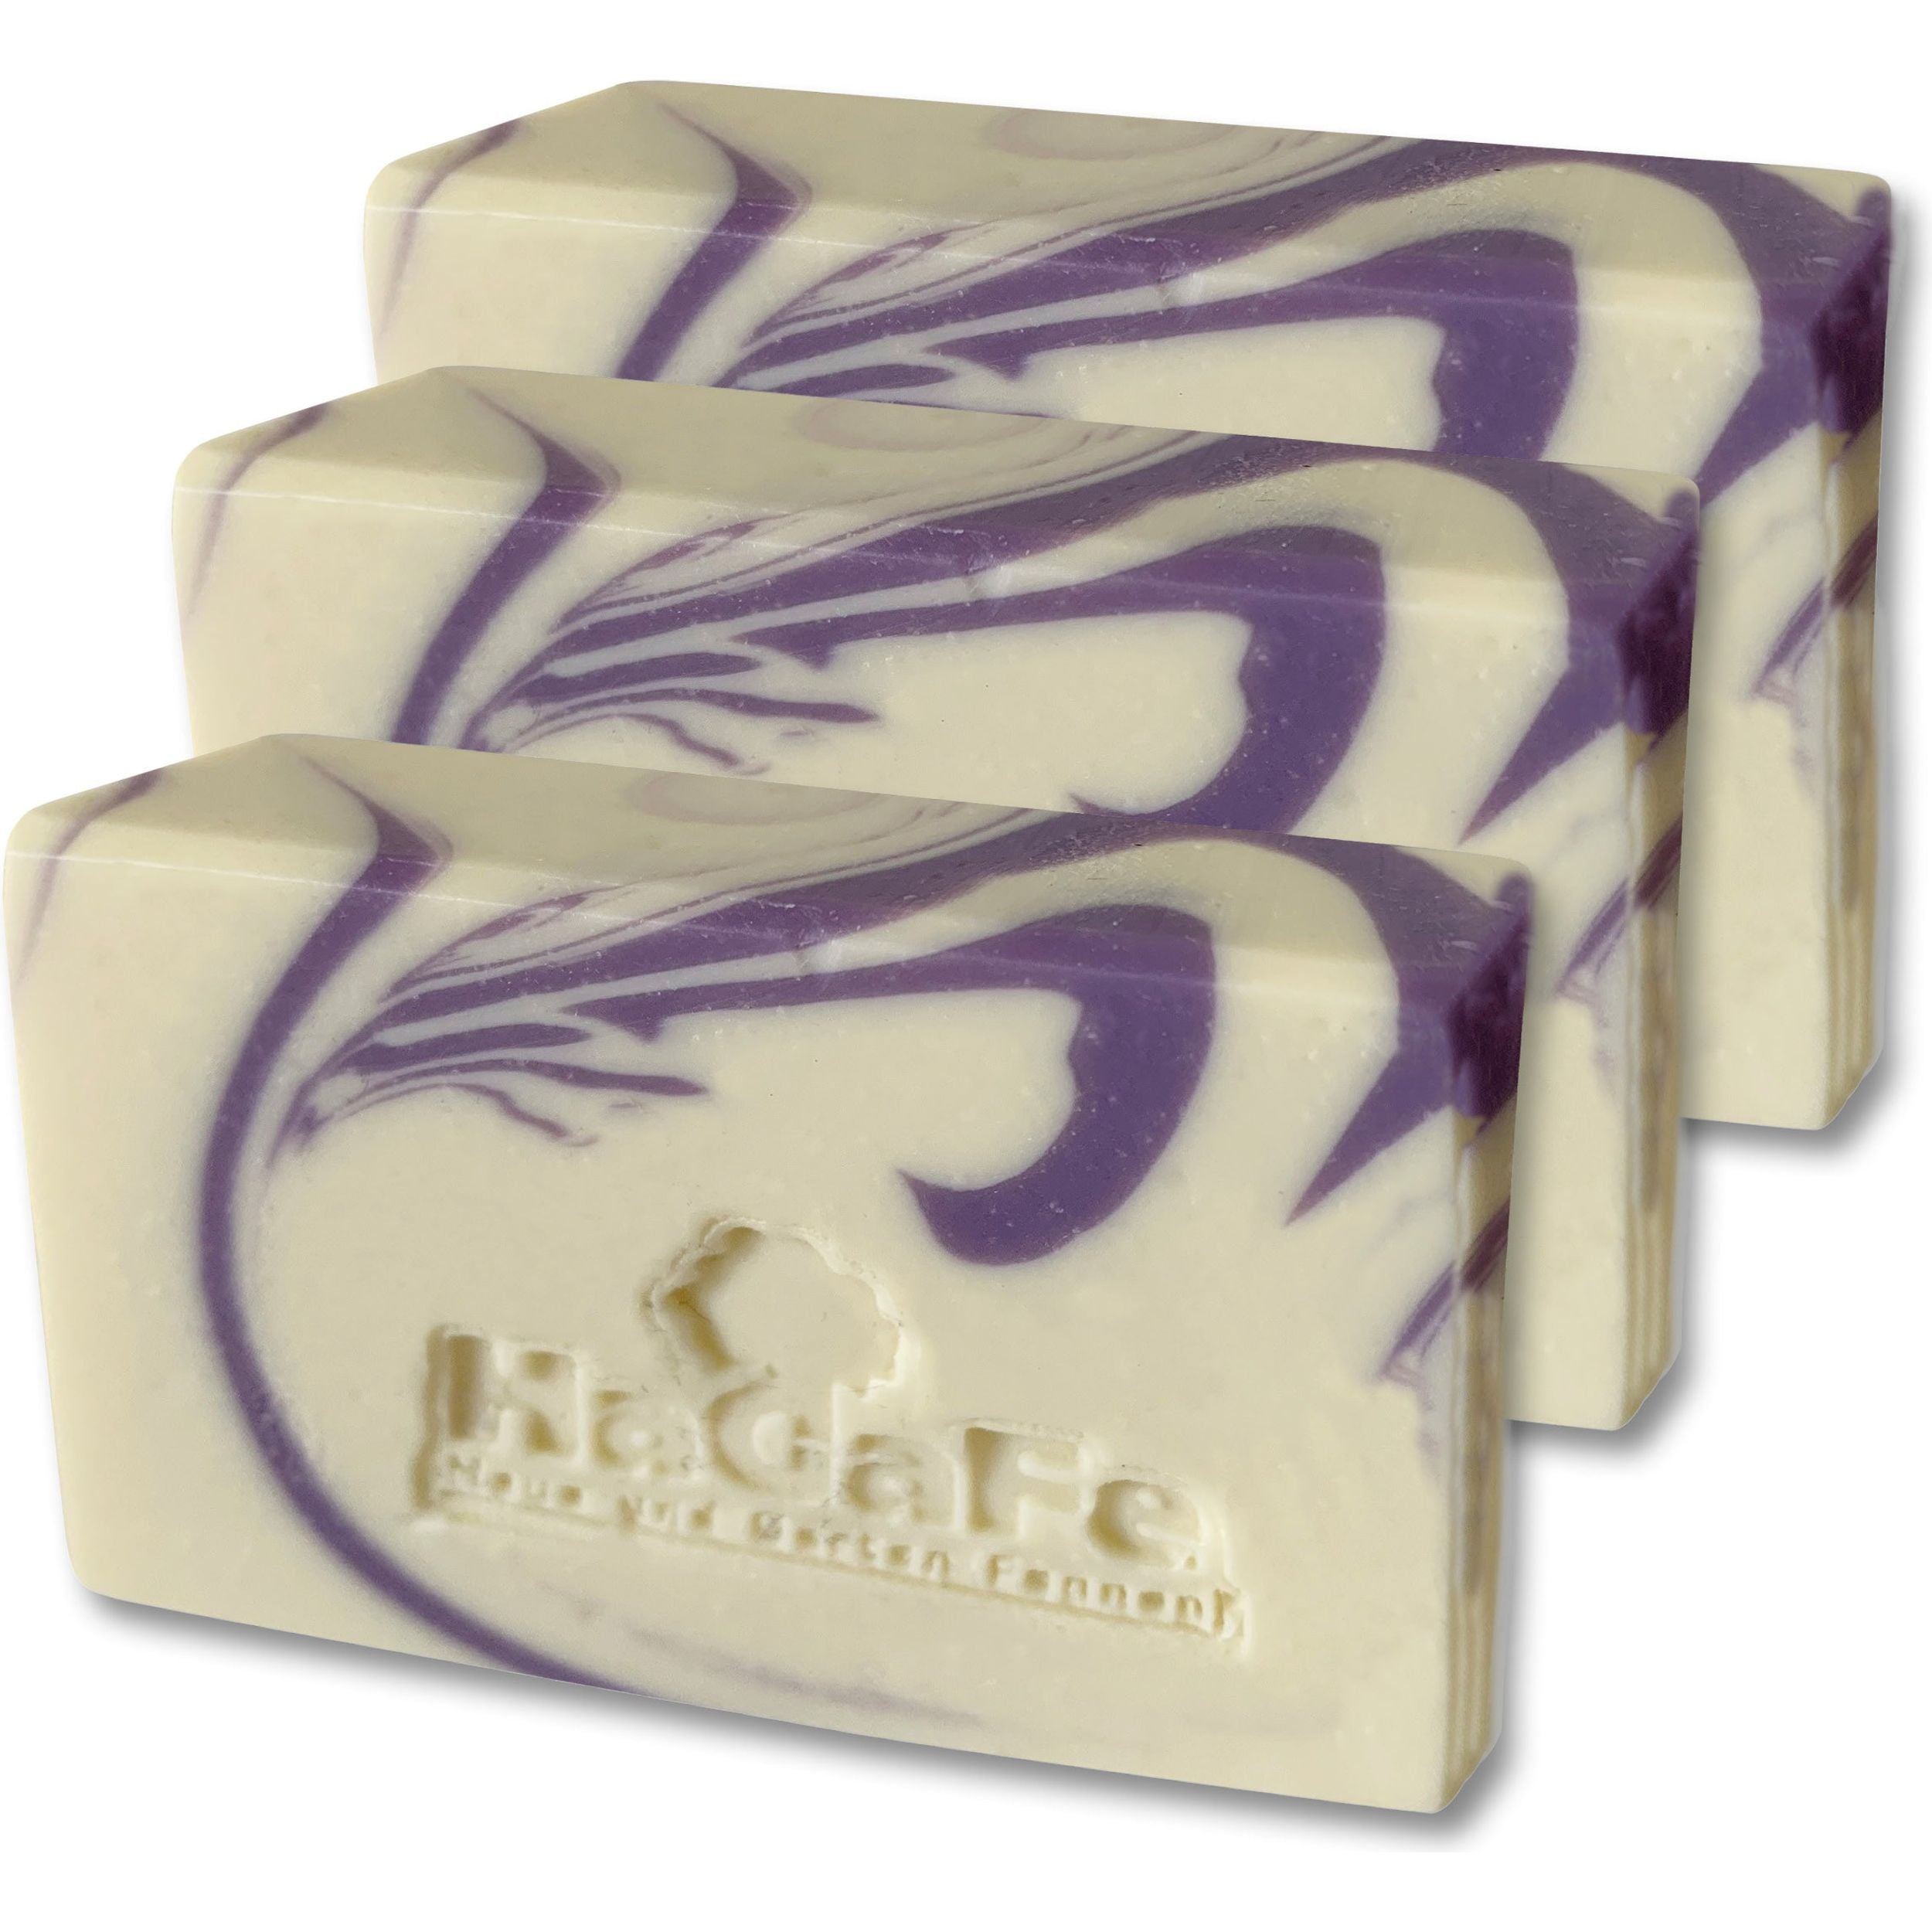 HaGaFe Lavendeltraum vegane handgemachte Naturseife feste Seife